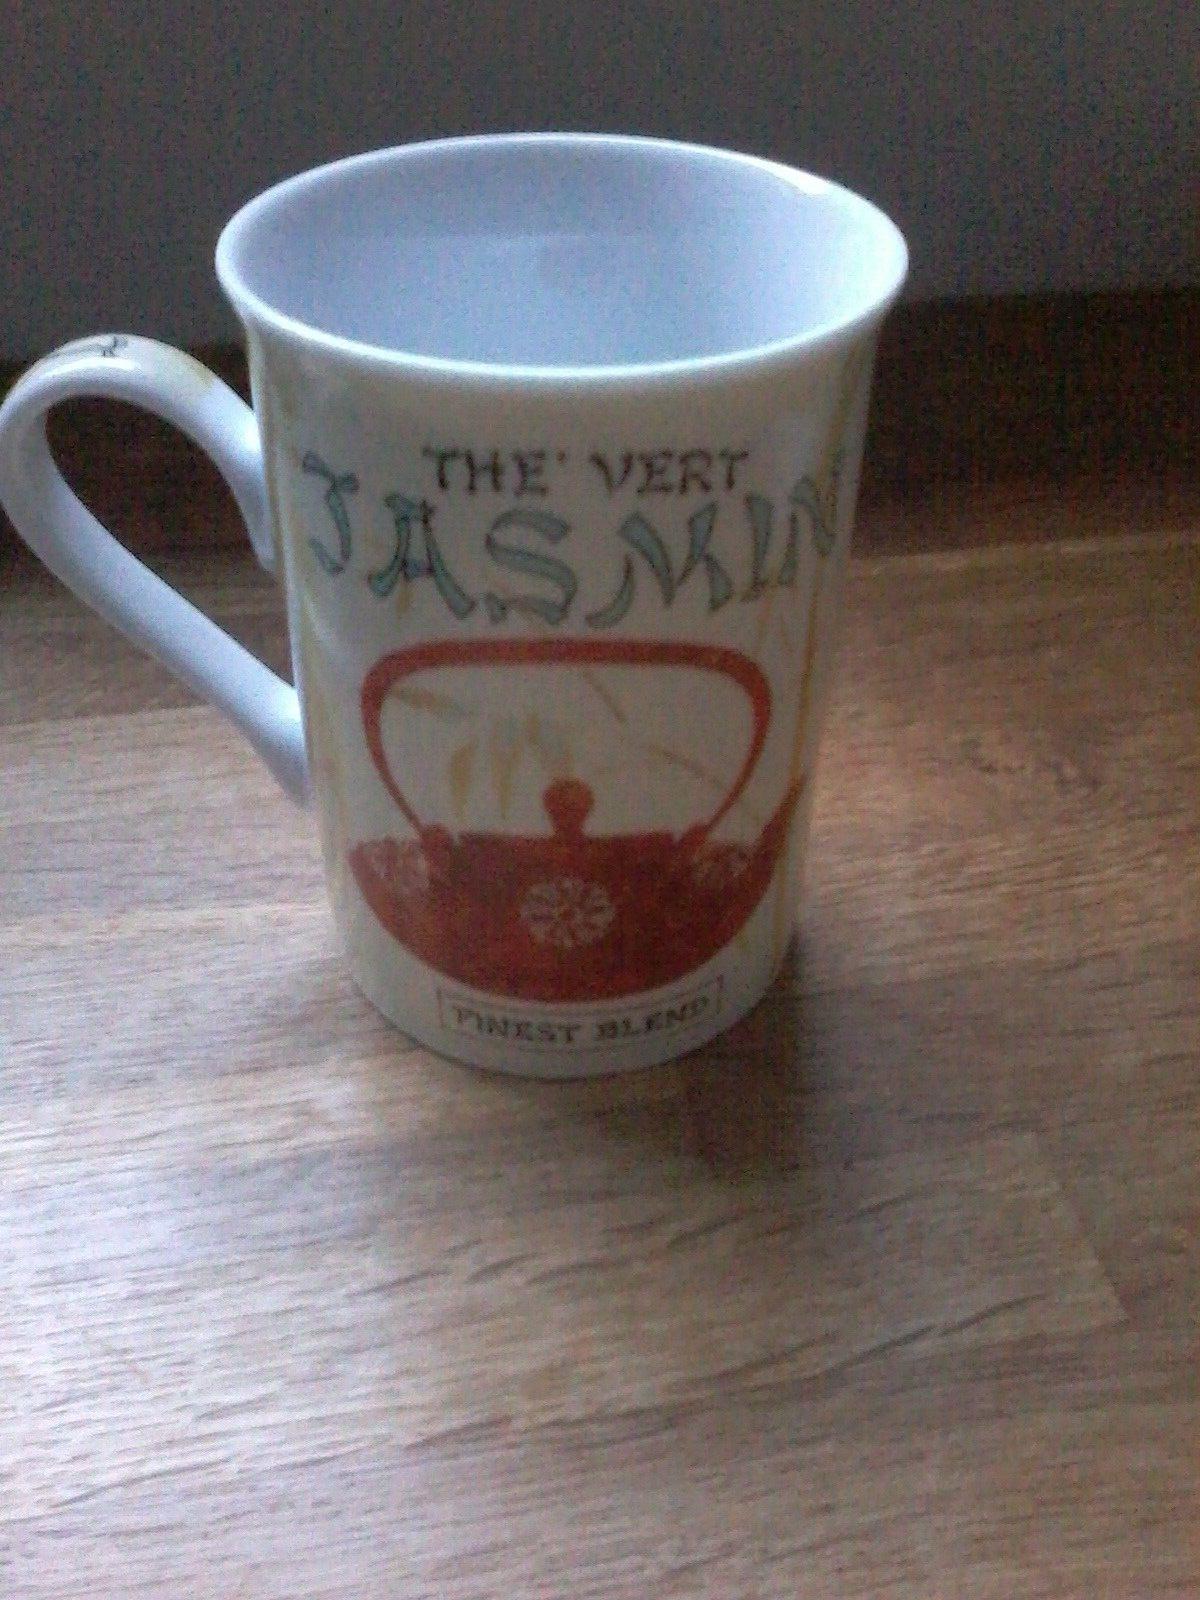 troc de troc mug tasse thé vert jasmin image 0